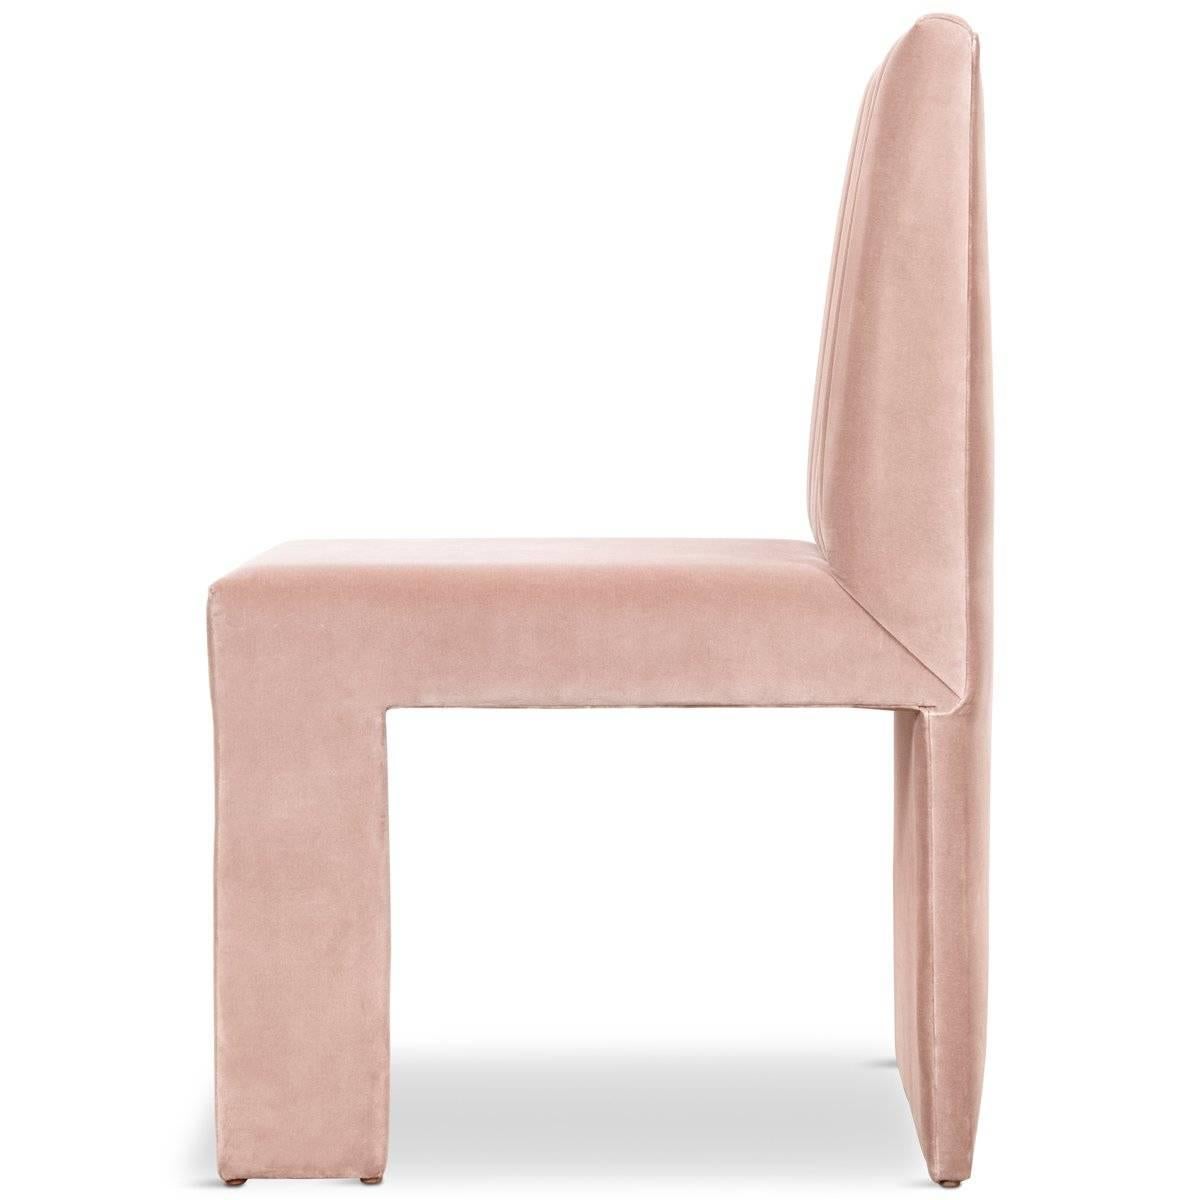 Chinese Asymmetric Modern Style St. Martin Dining Chair Lush Velvet Upholstery 7 colors For Sale